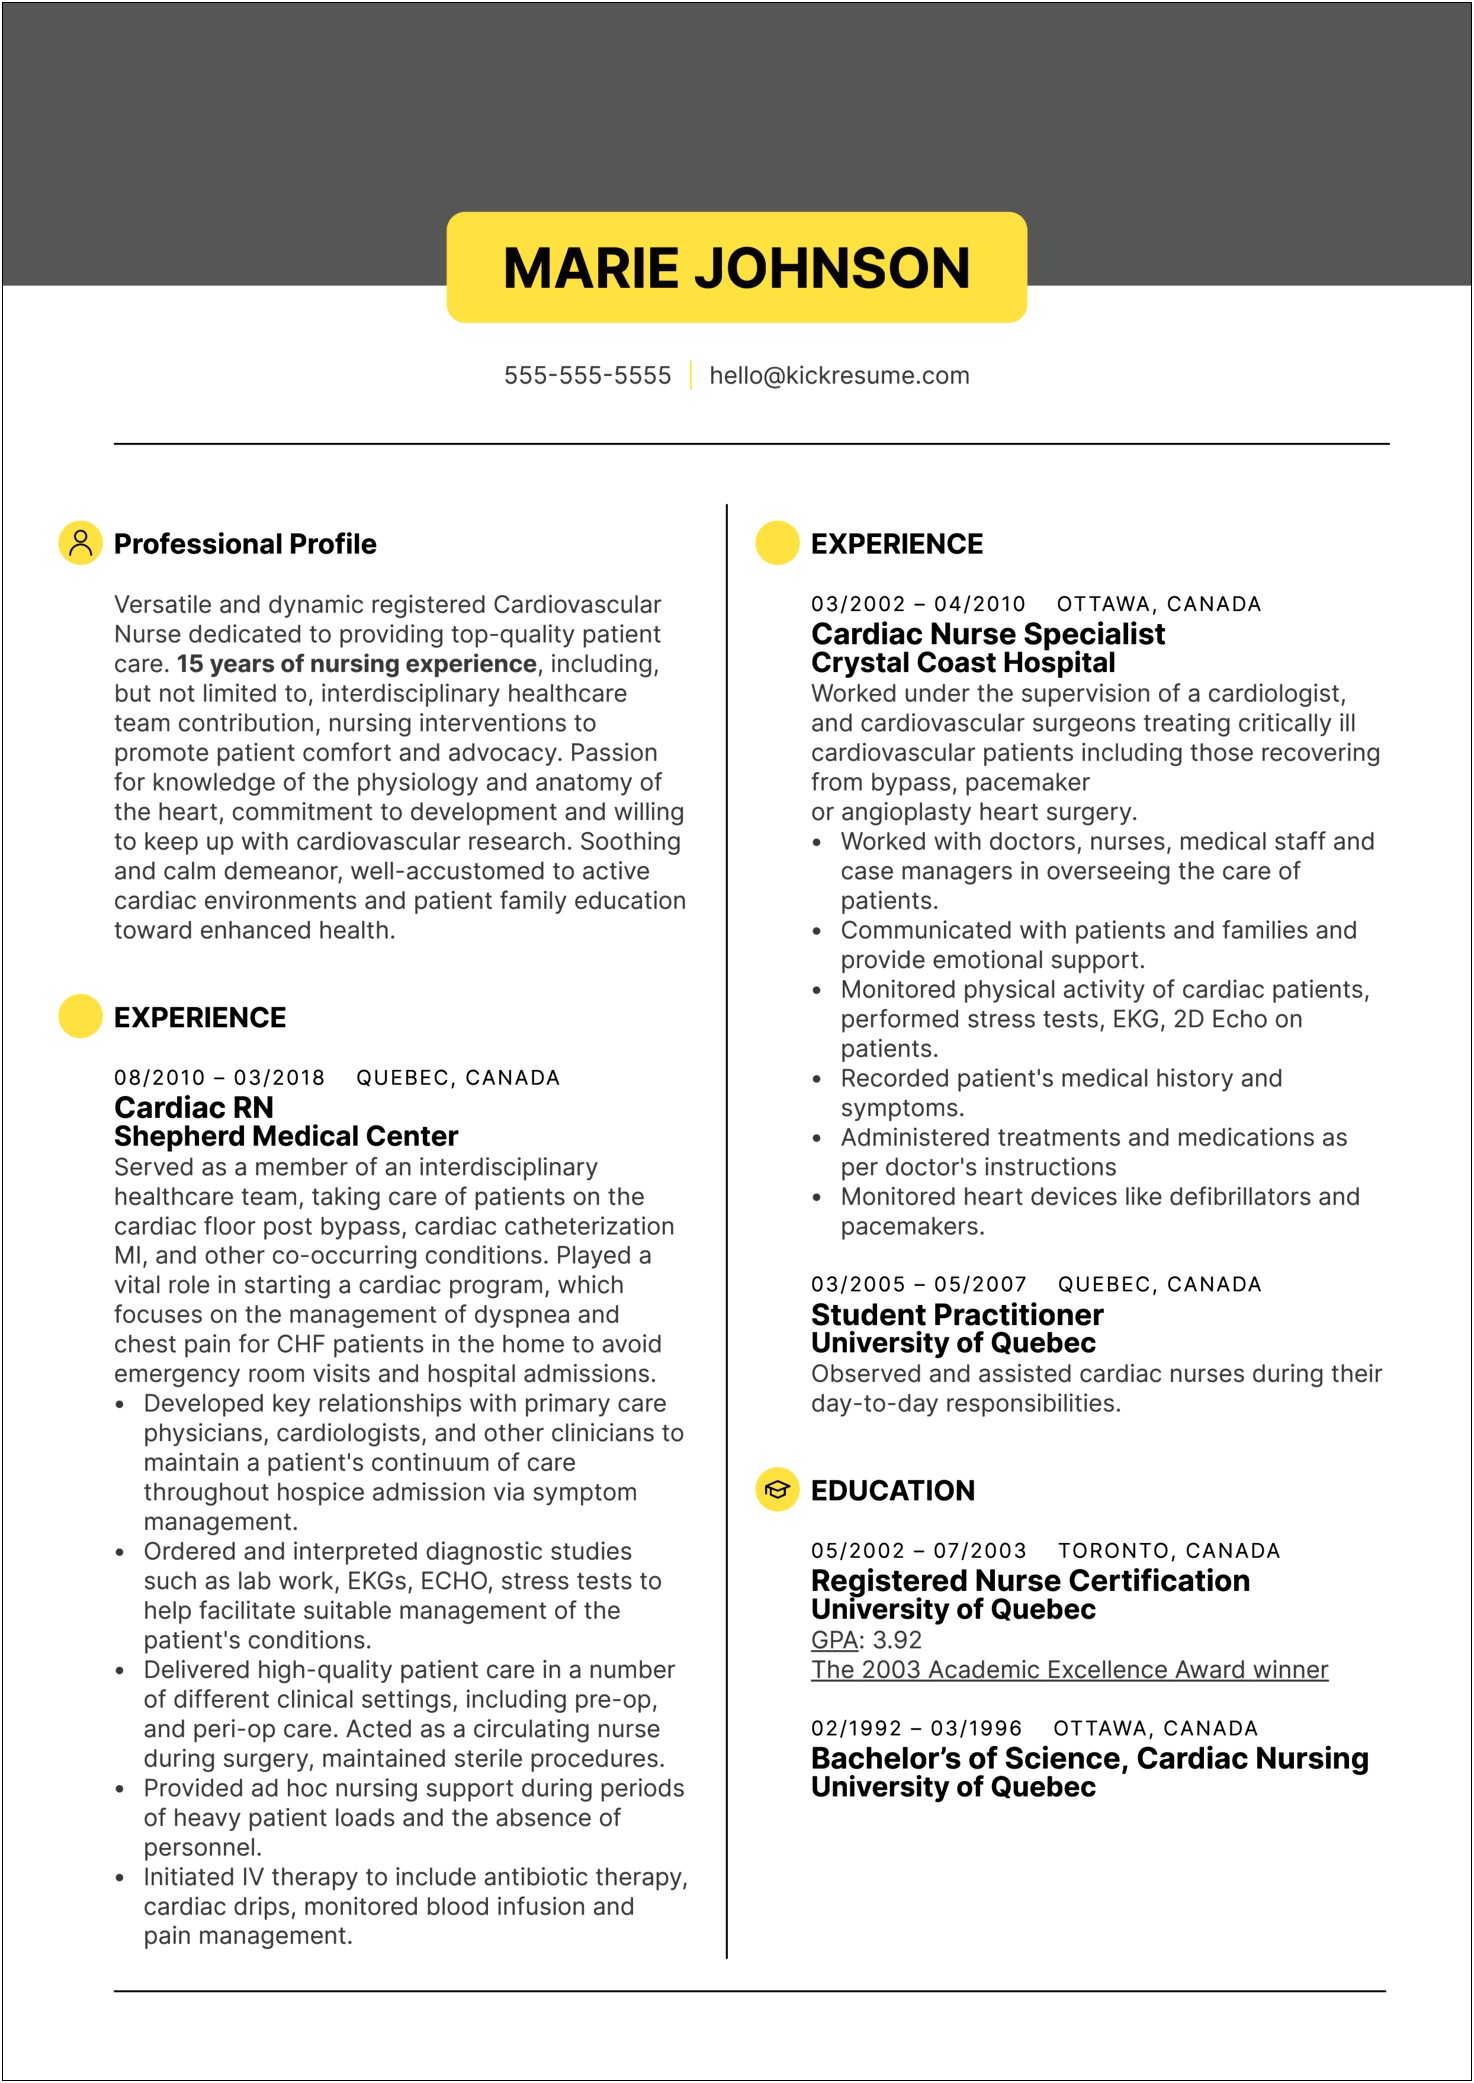 Resume Nurse Career Profile Examples